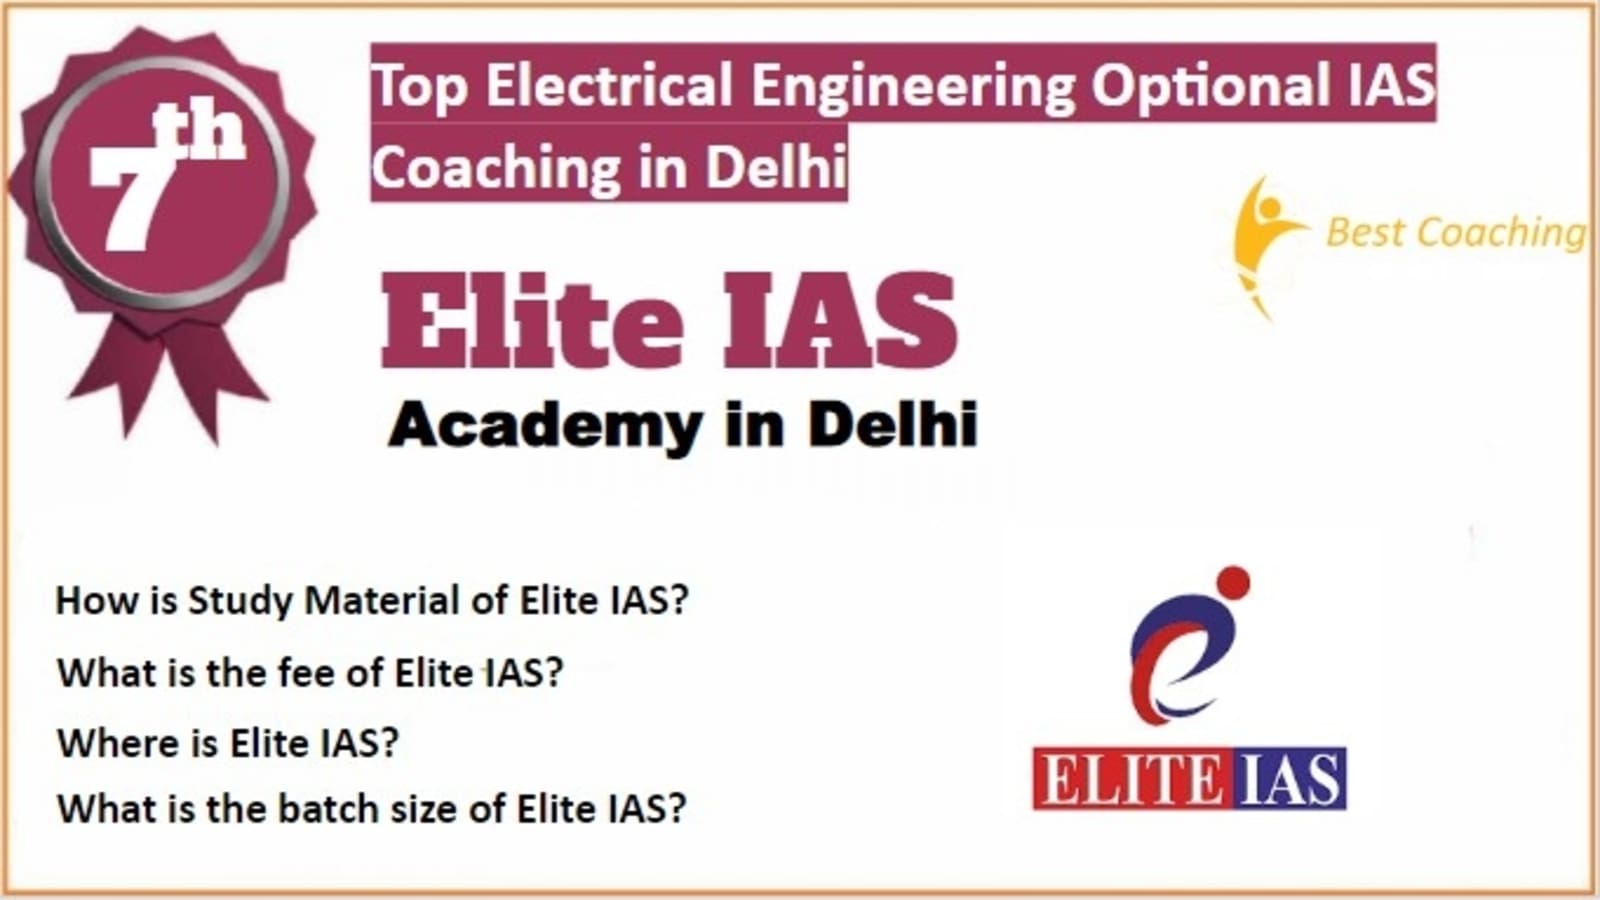 Rank 7 Best Electrical Engineering Optional IAS Coaching in Delhi